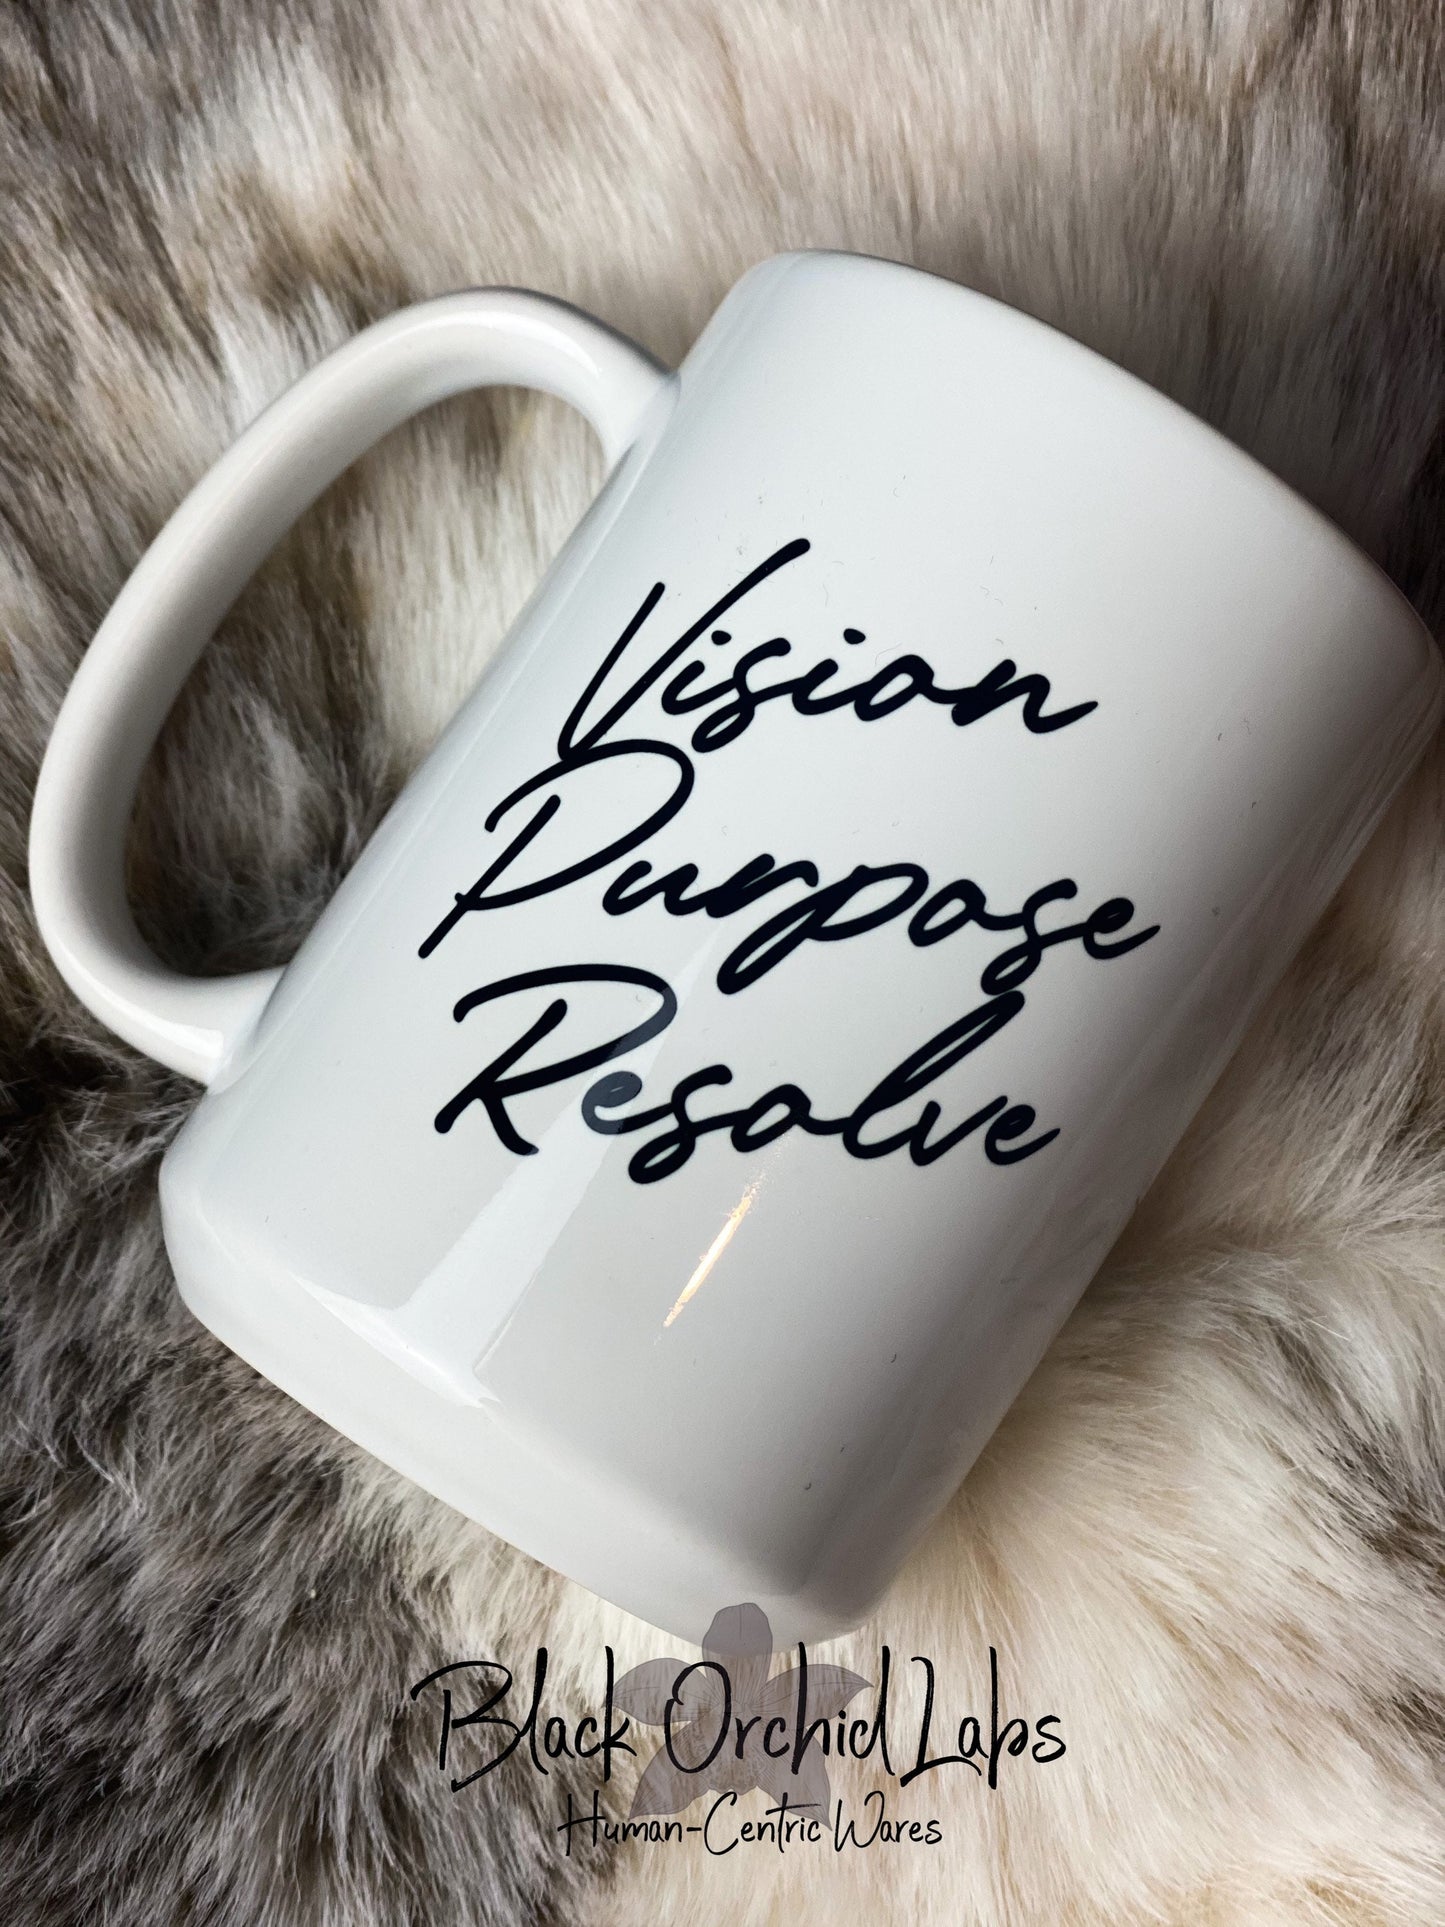 Raven Ceramic Coffee Mug, Inspiring Message, Coffee Cup, Vision, Purpose, Resolve